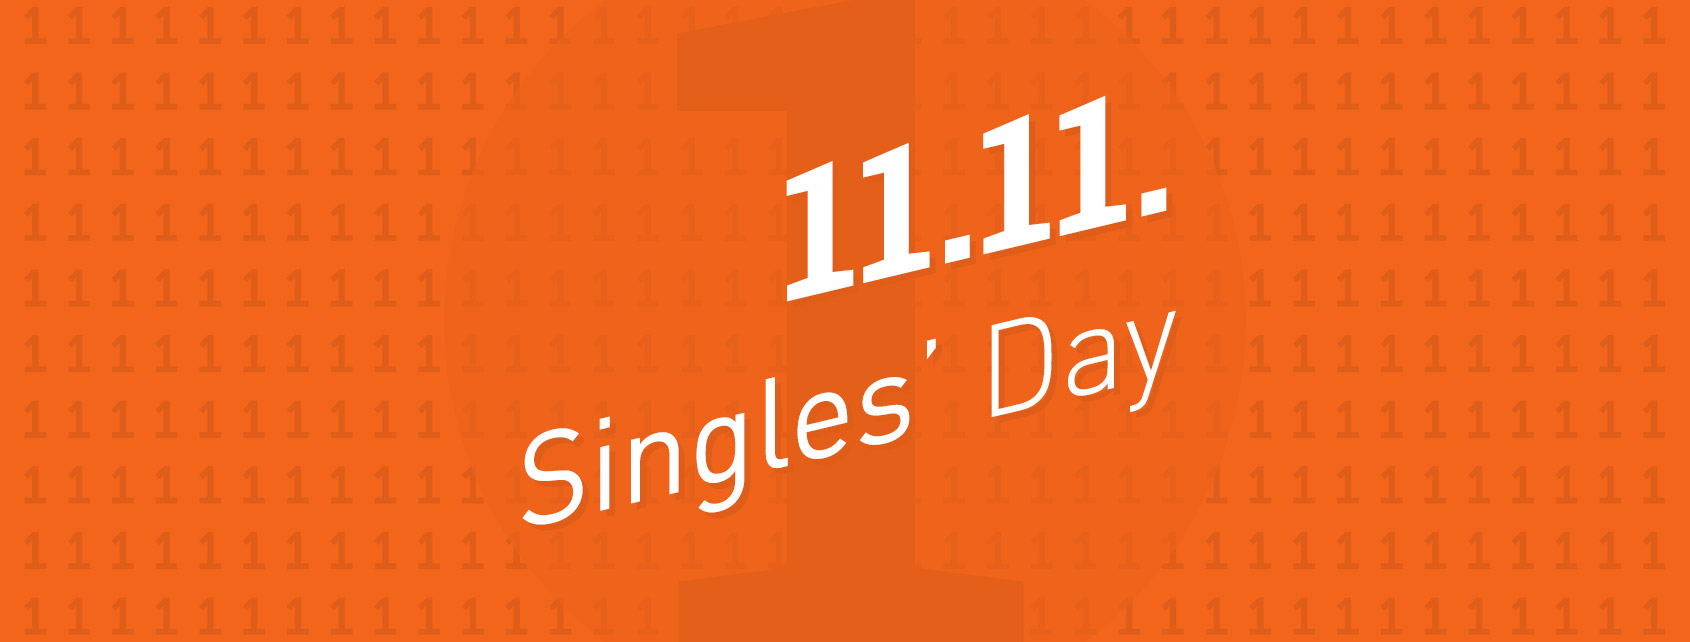 blogheader-singles-day-2021-1690x642px-@2x